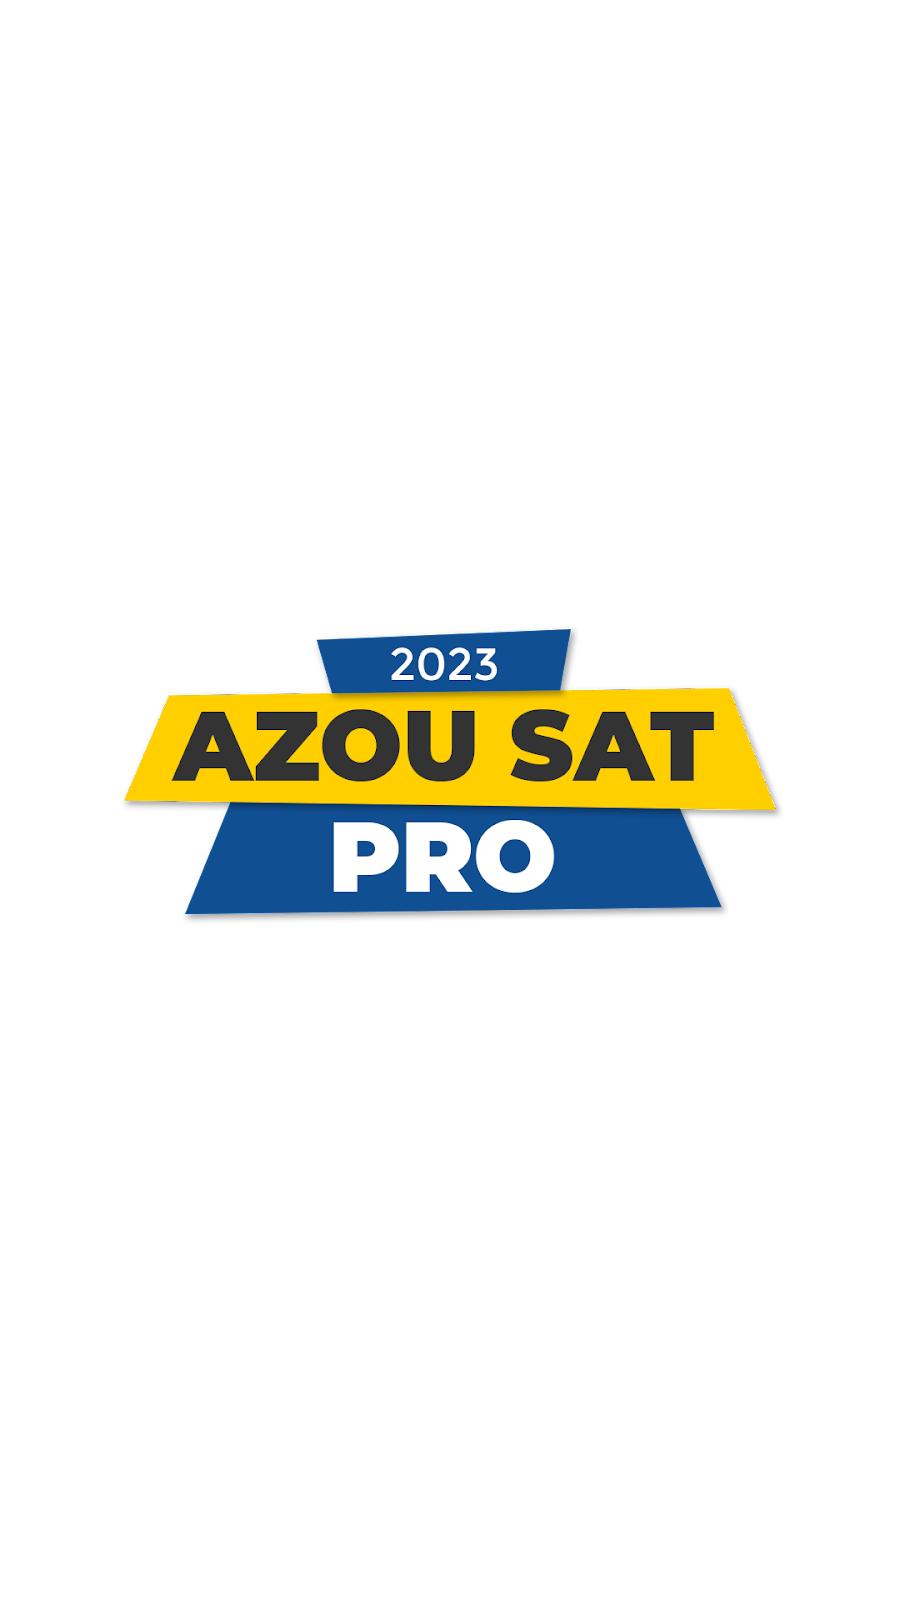 Azou Sat Pro